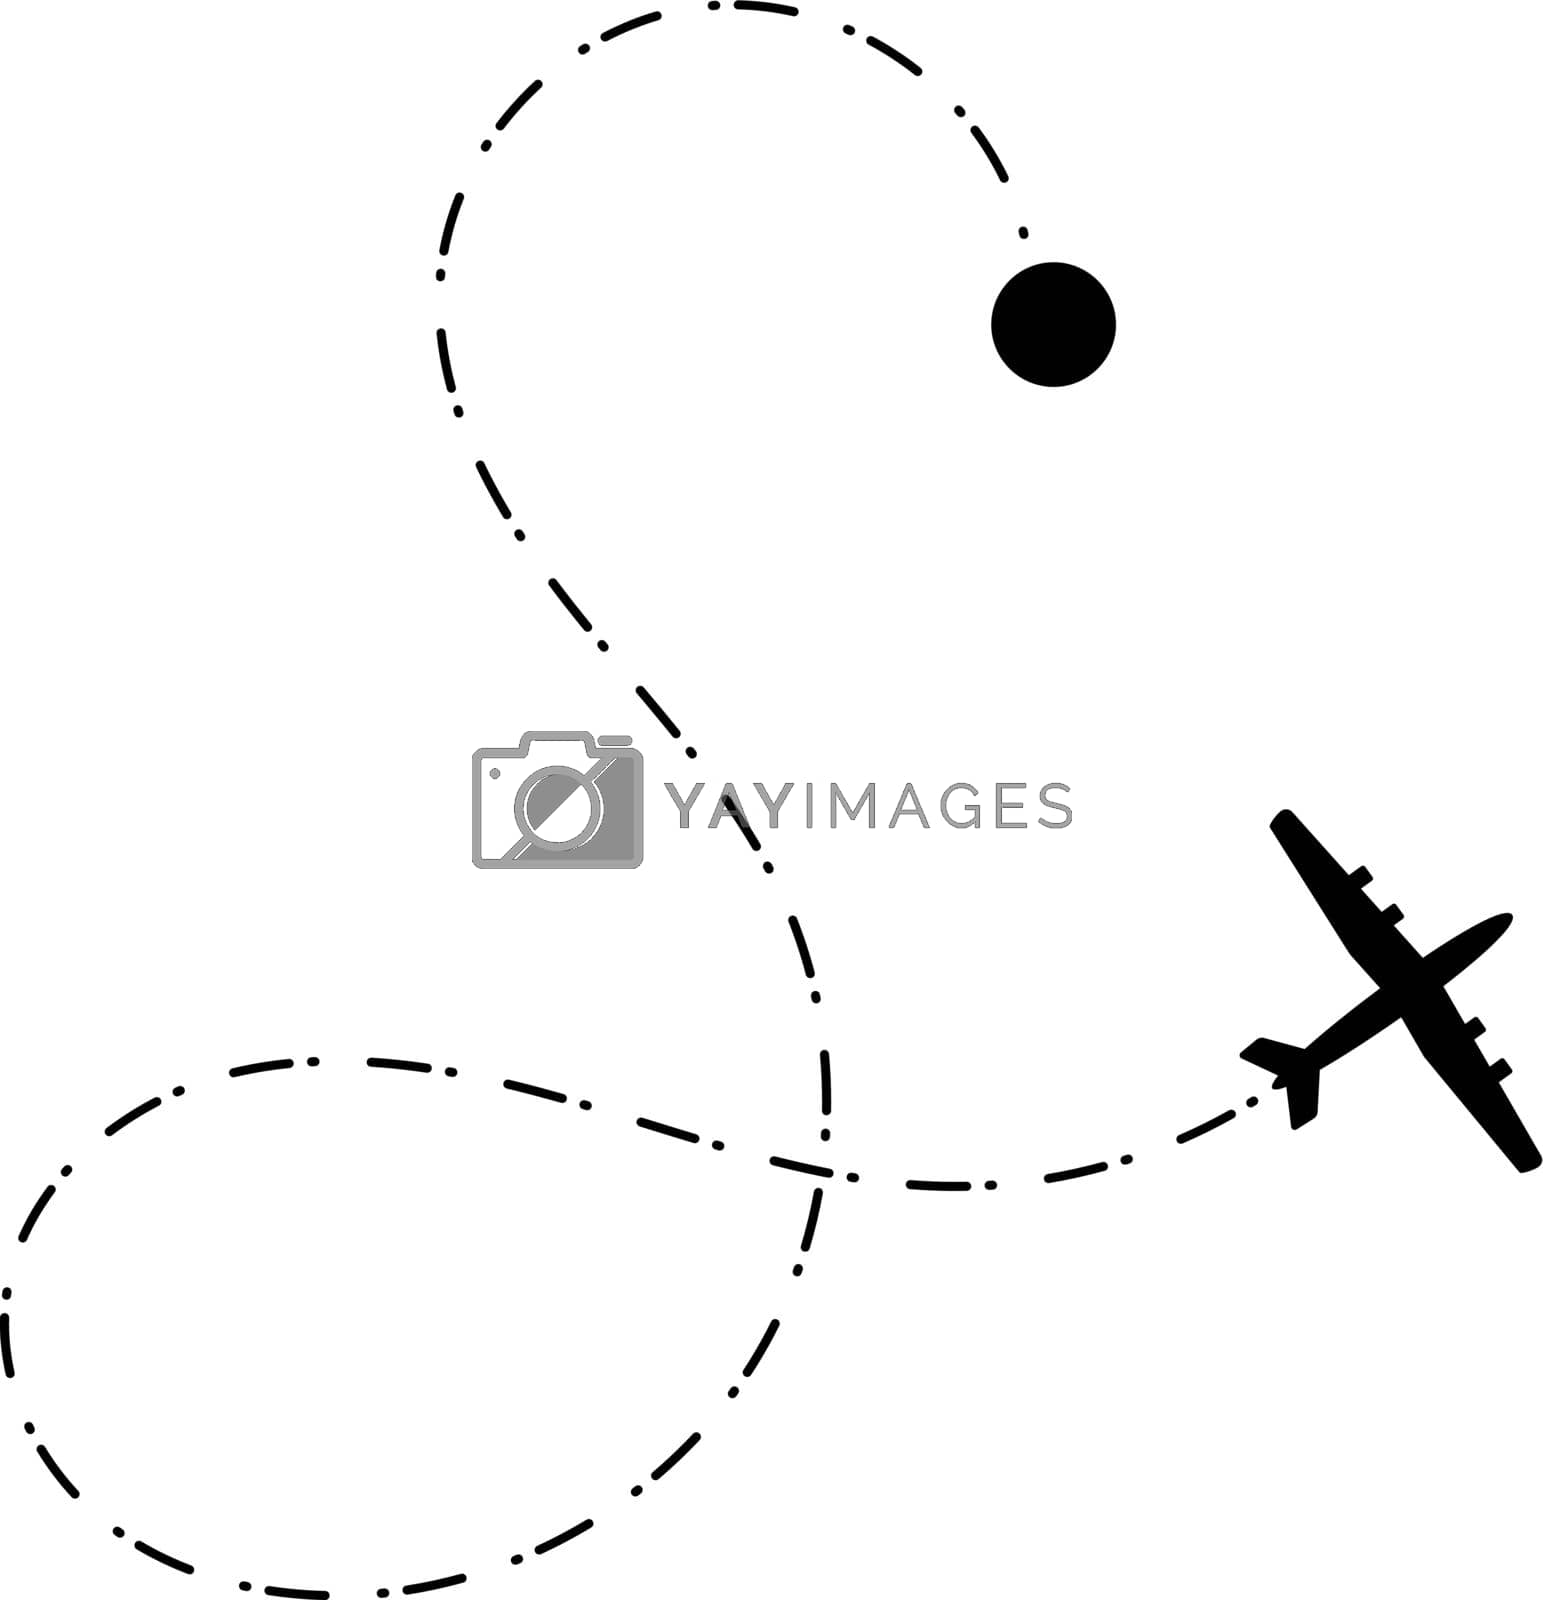 Royalty free image of Journey flight path. Aerial trip black line by LadadikArt